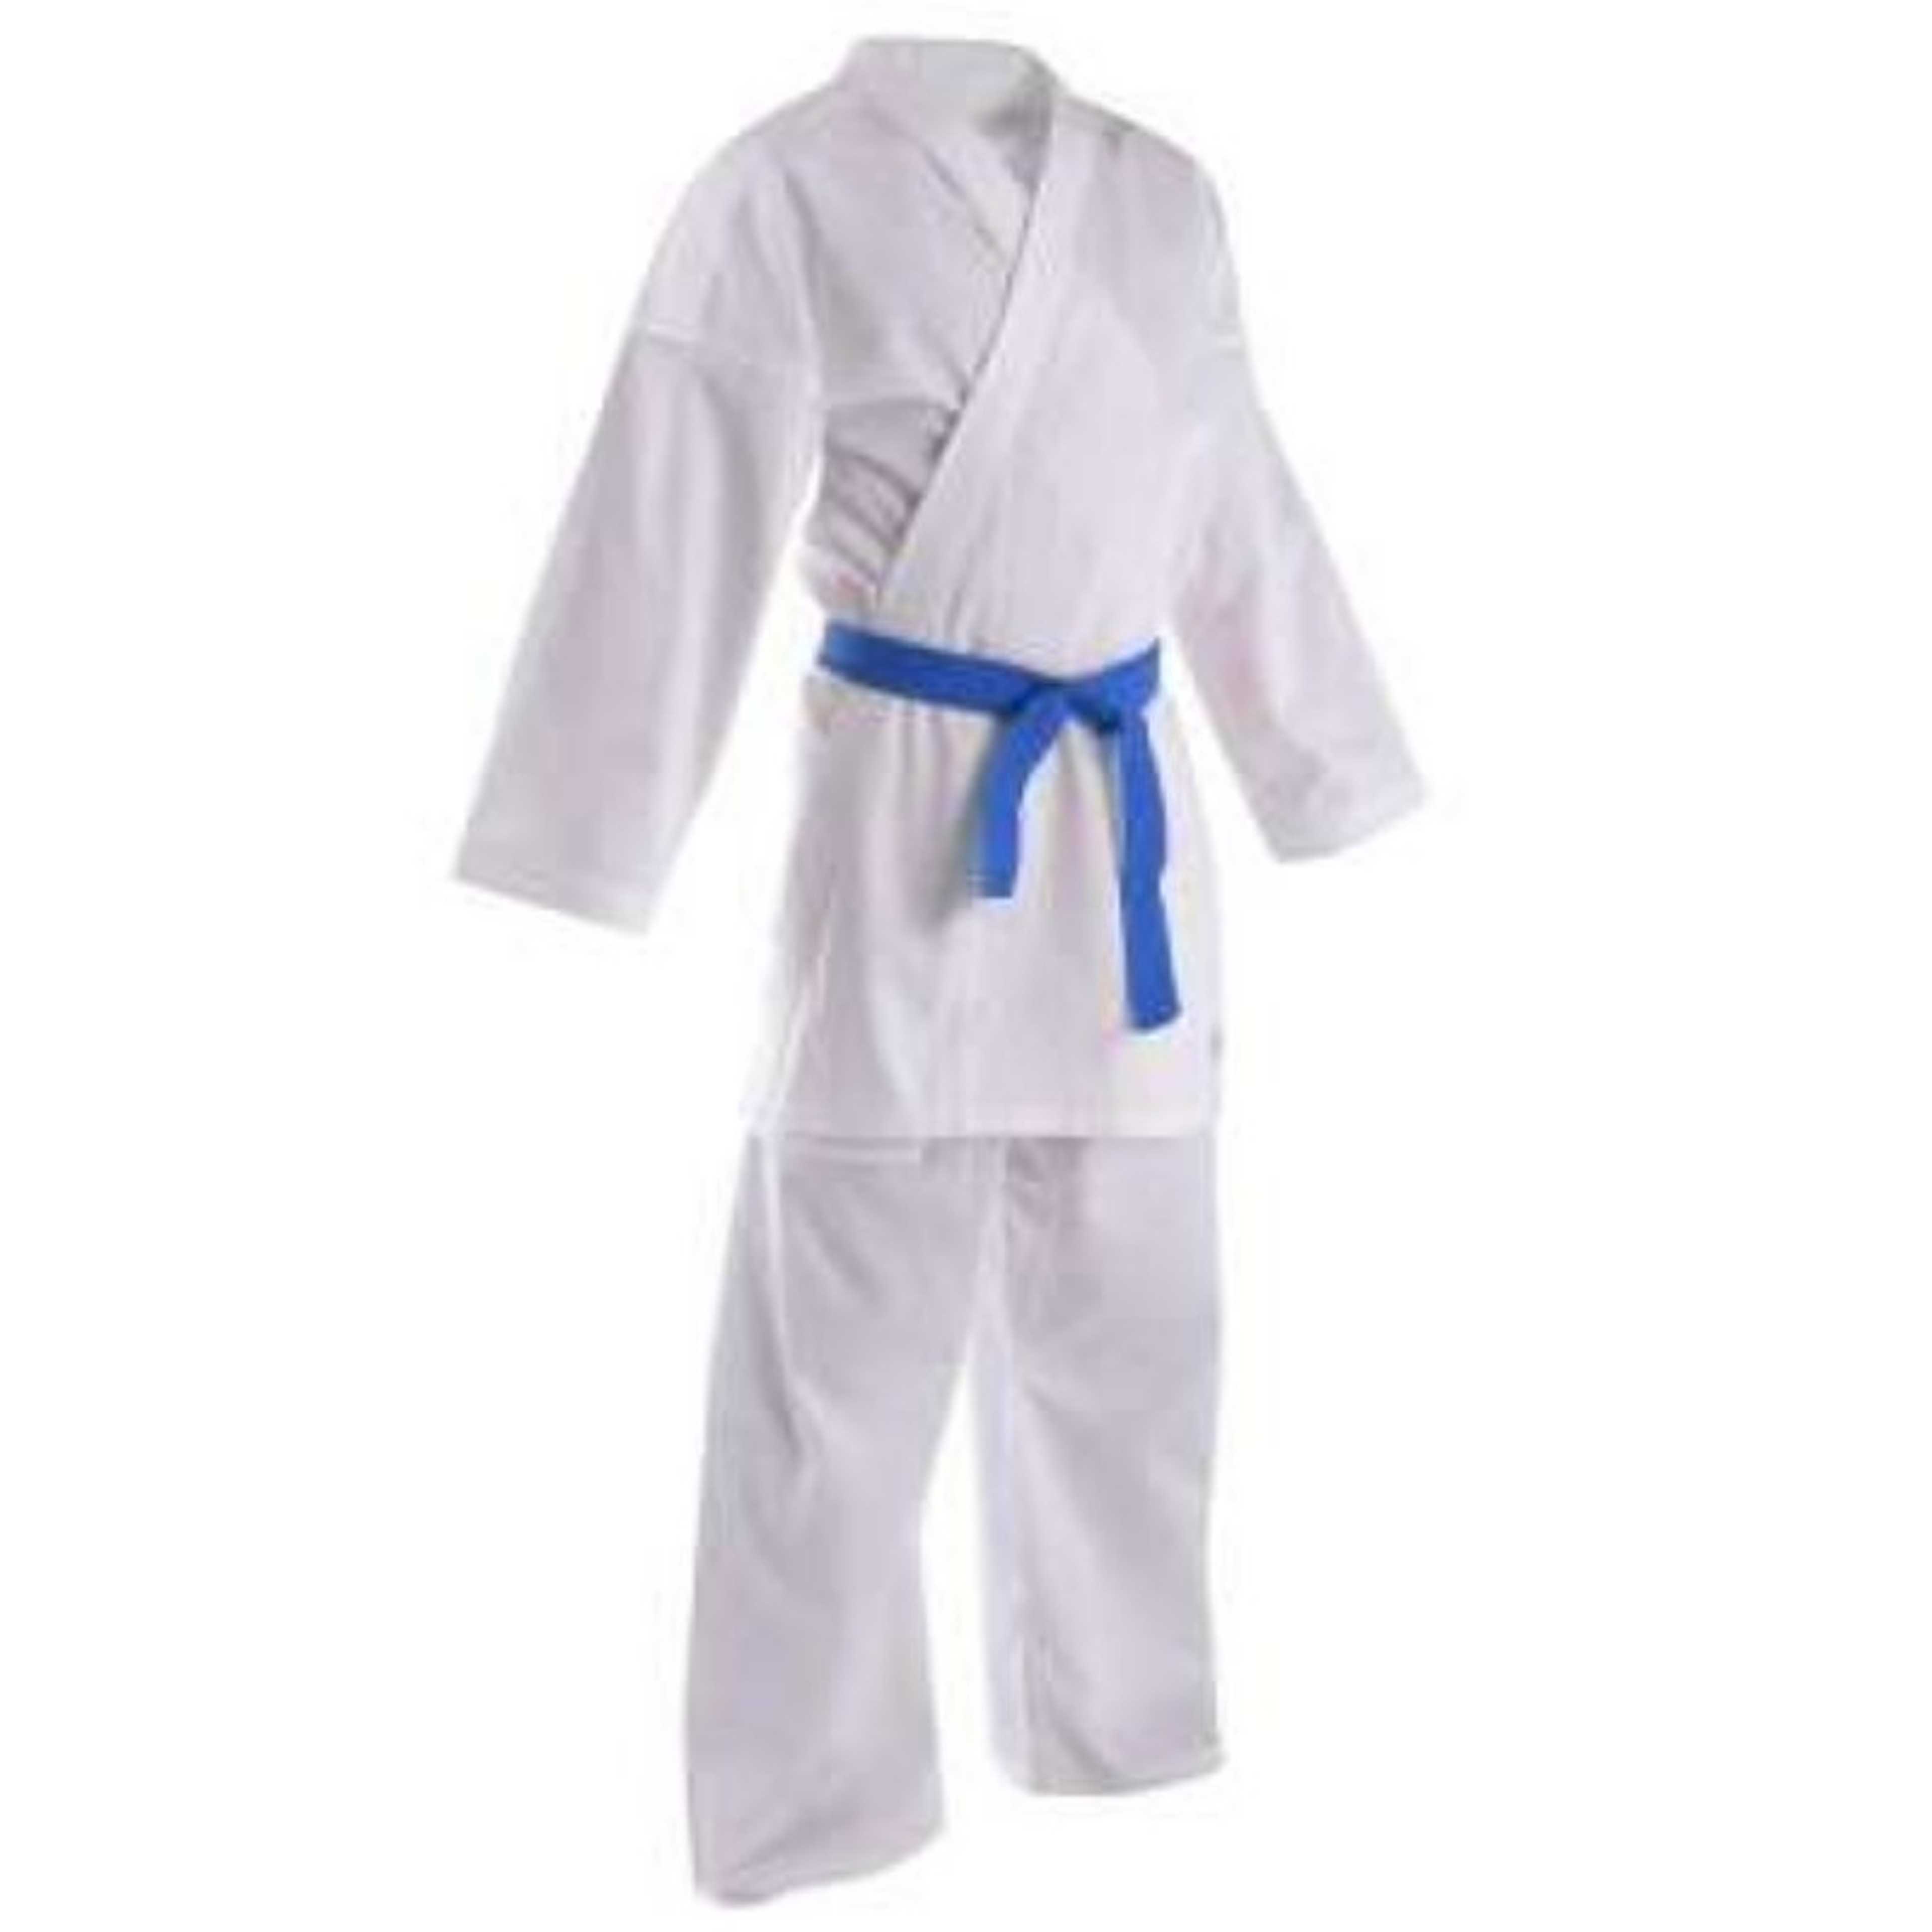 Export Quality Karate Dress Kit No 7 with Blue Belt